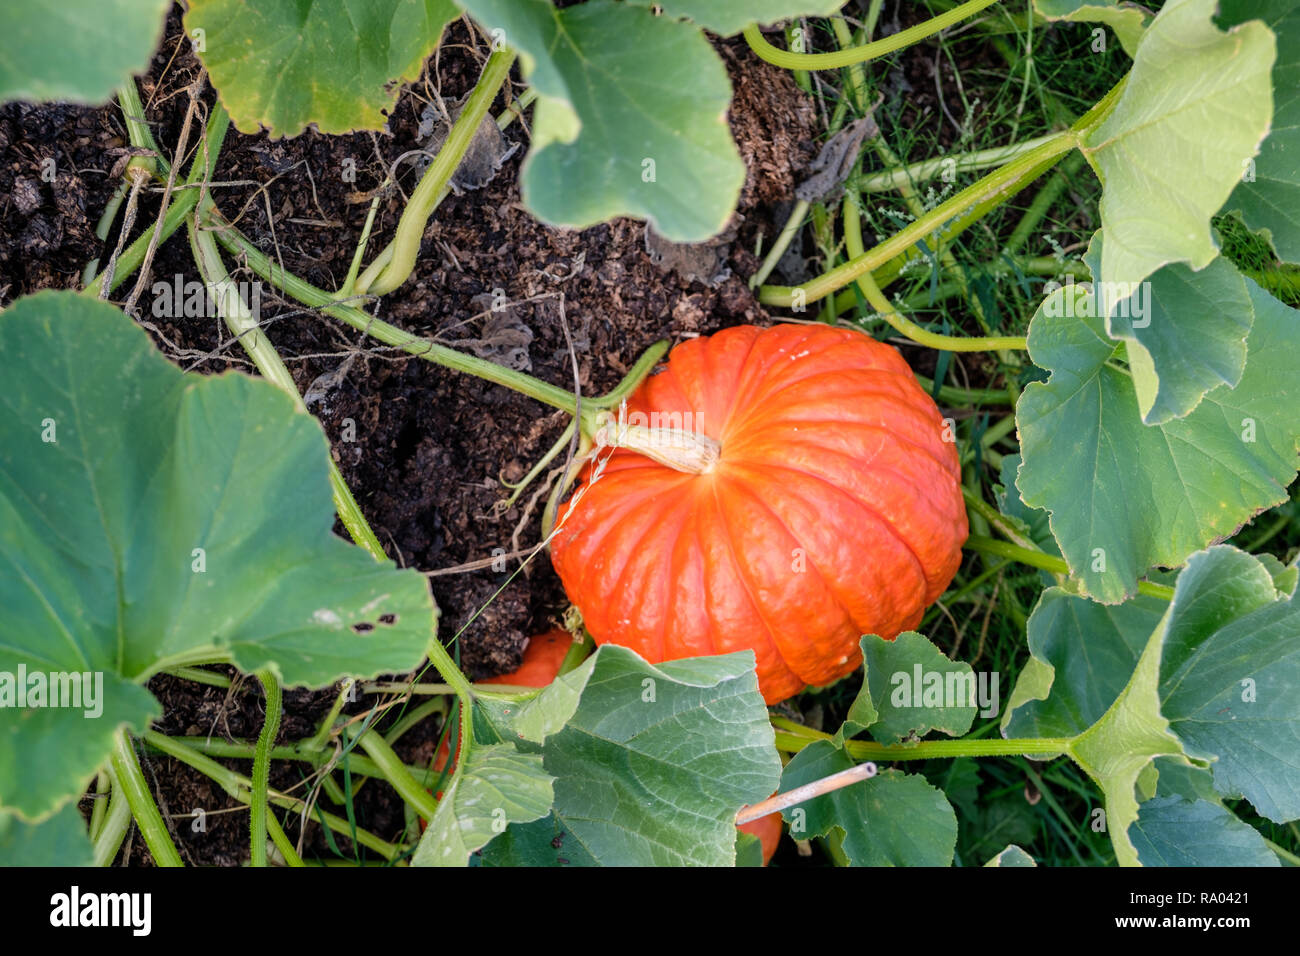 Rouge d'Estampe pumpkins growing on an allotment, UK Stock Photo